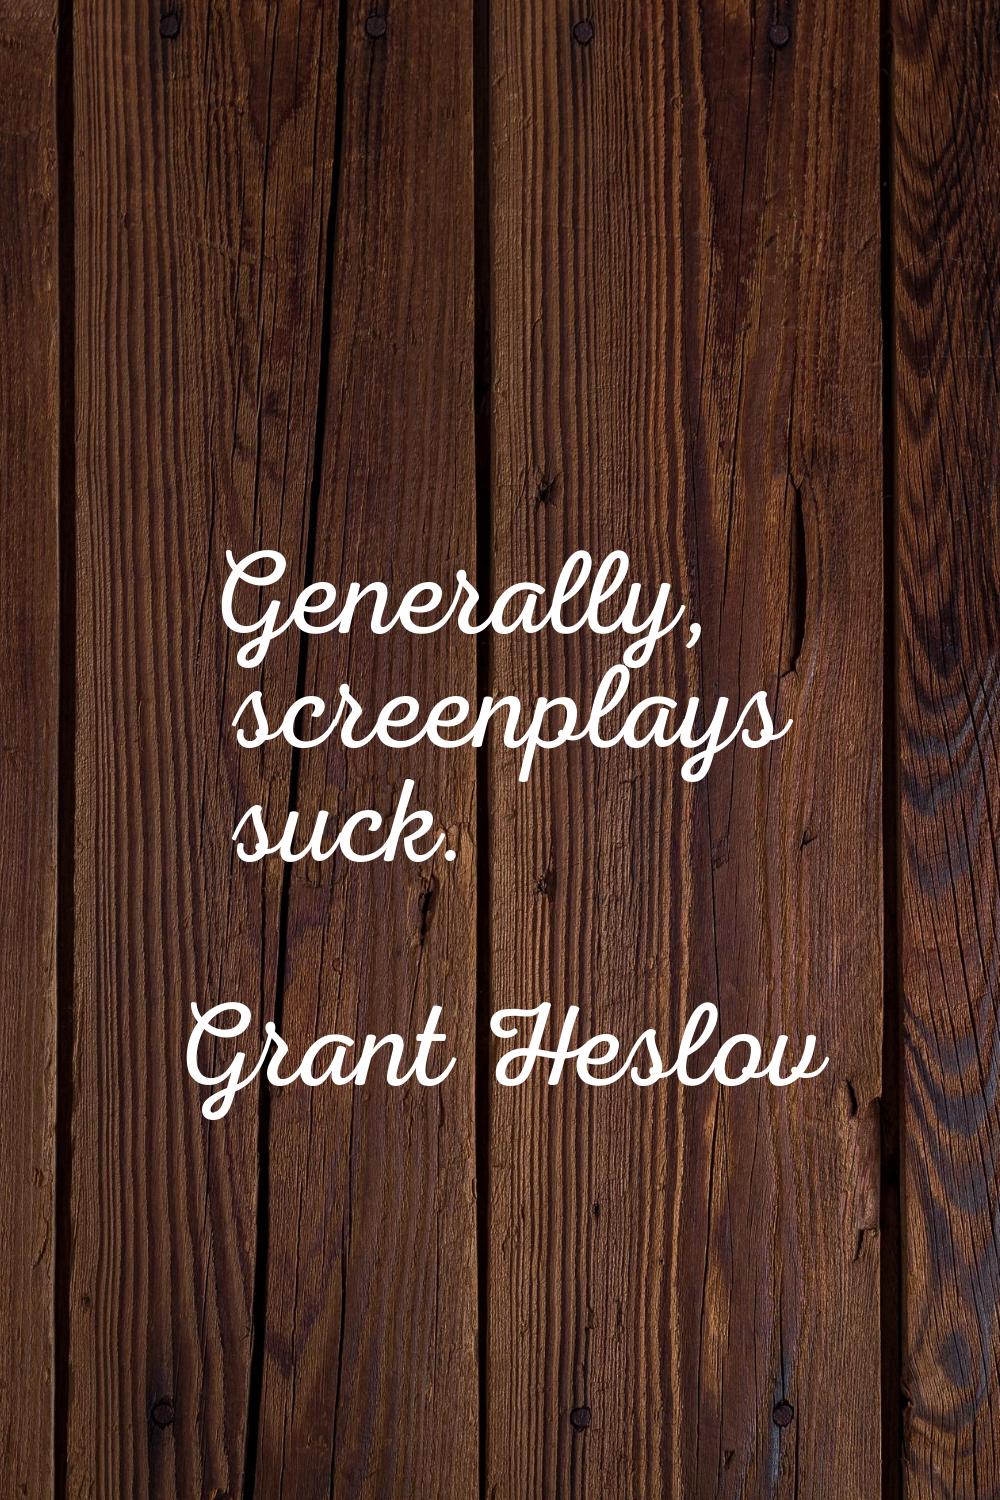 Generally, screenplays suck.